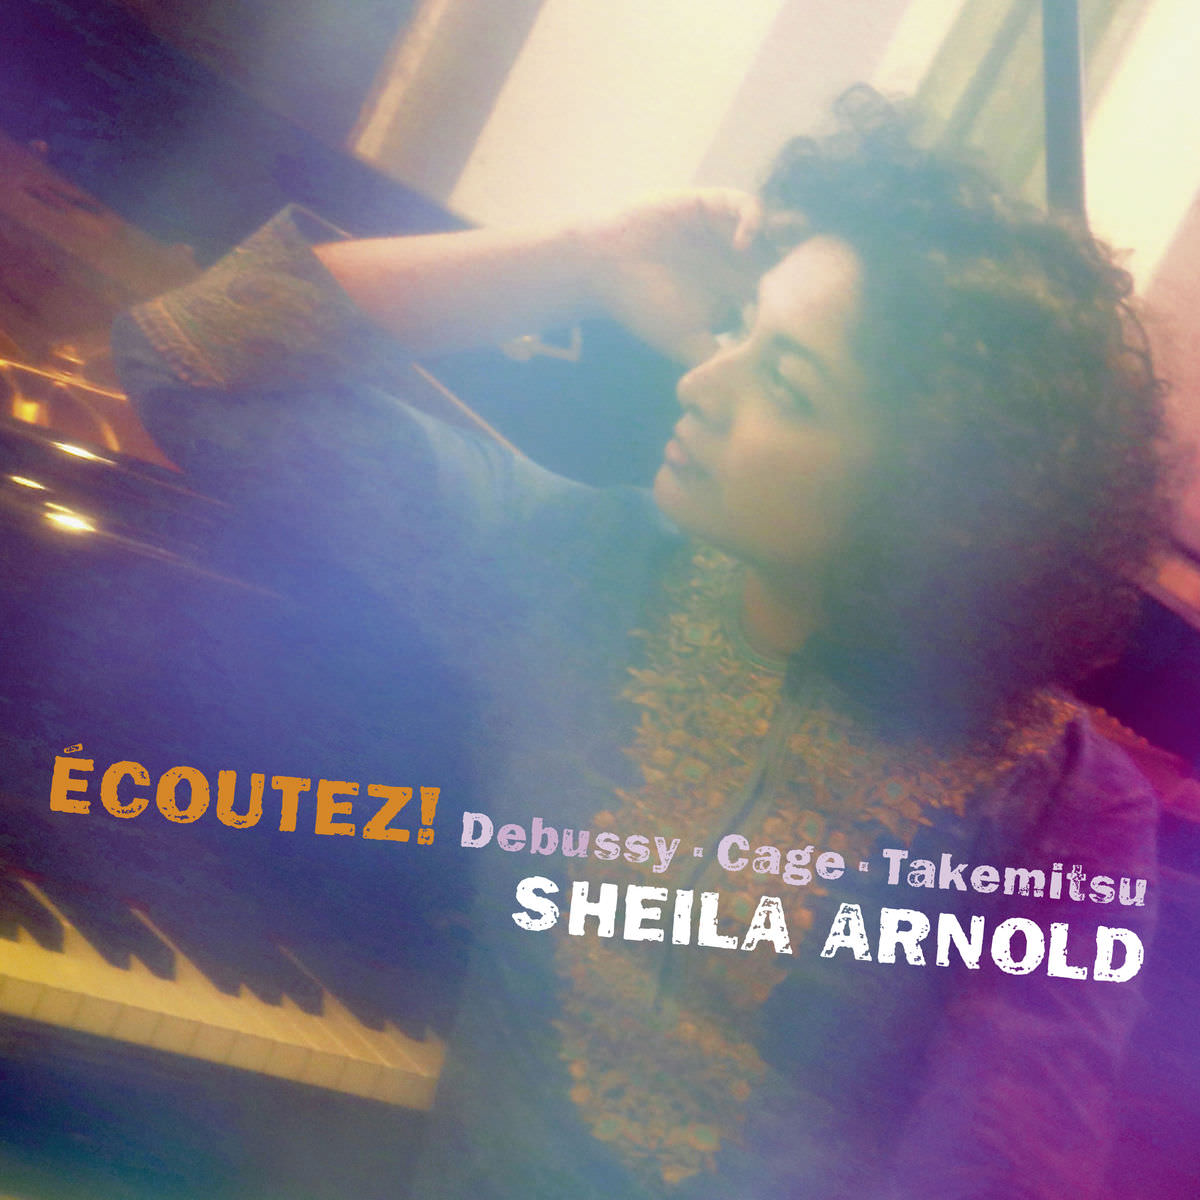 Sheila Arnold - ECOUTEZ! Debussy, Cage & Takemitsu (2018) [FLAC 24bit/48kHz]